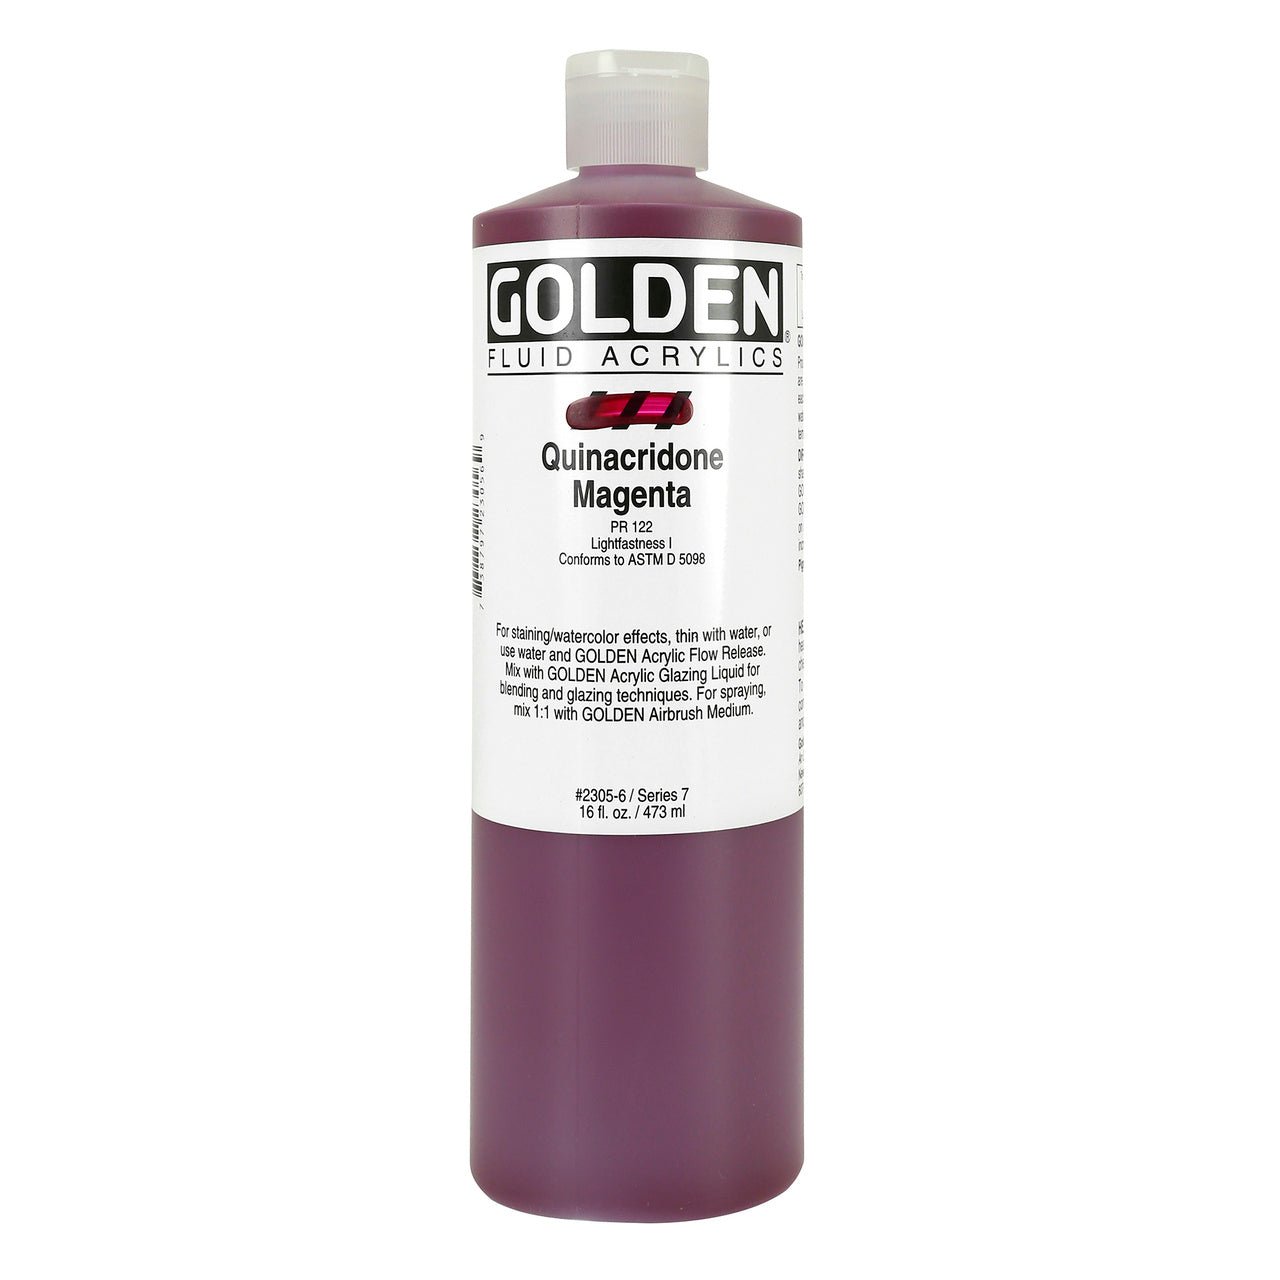 Golden Fluid Acrylic Quinacridone Magenta 16 oz - merriartist.com